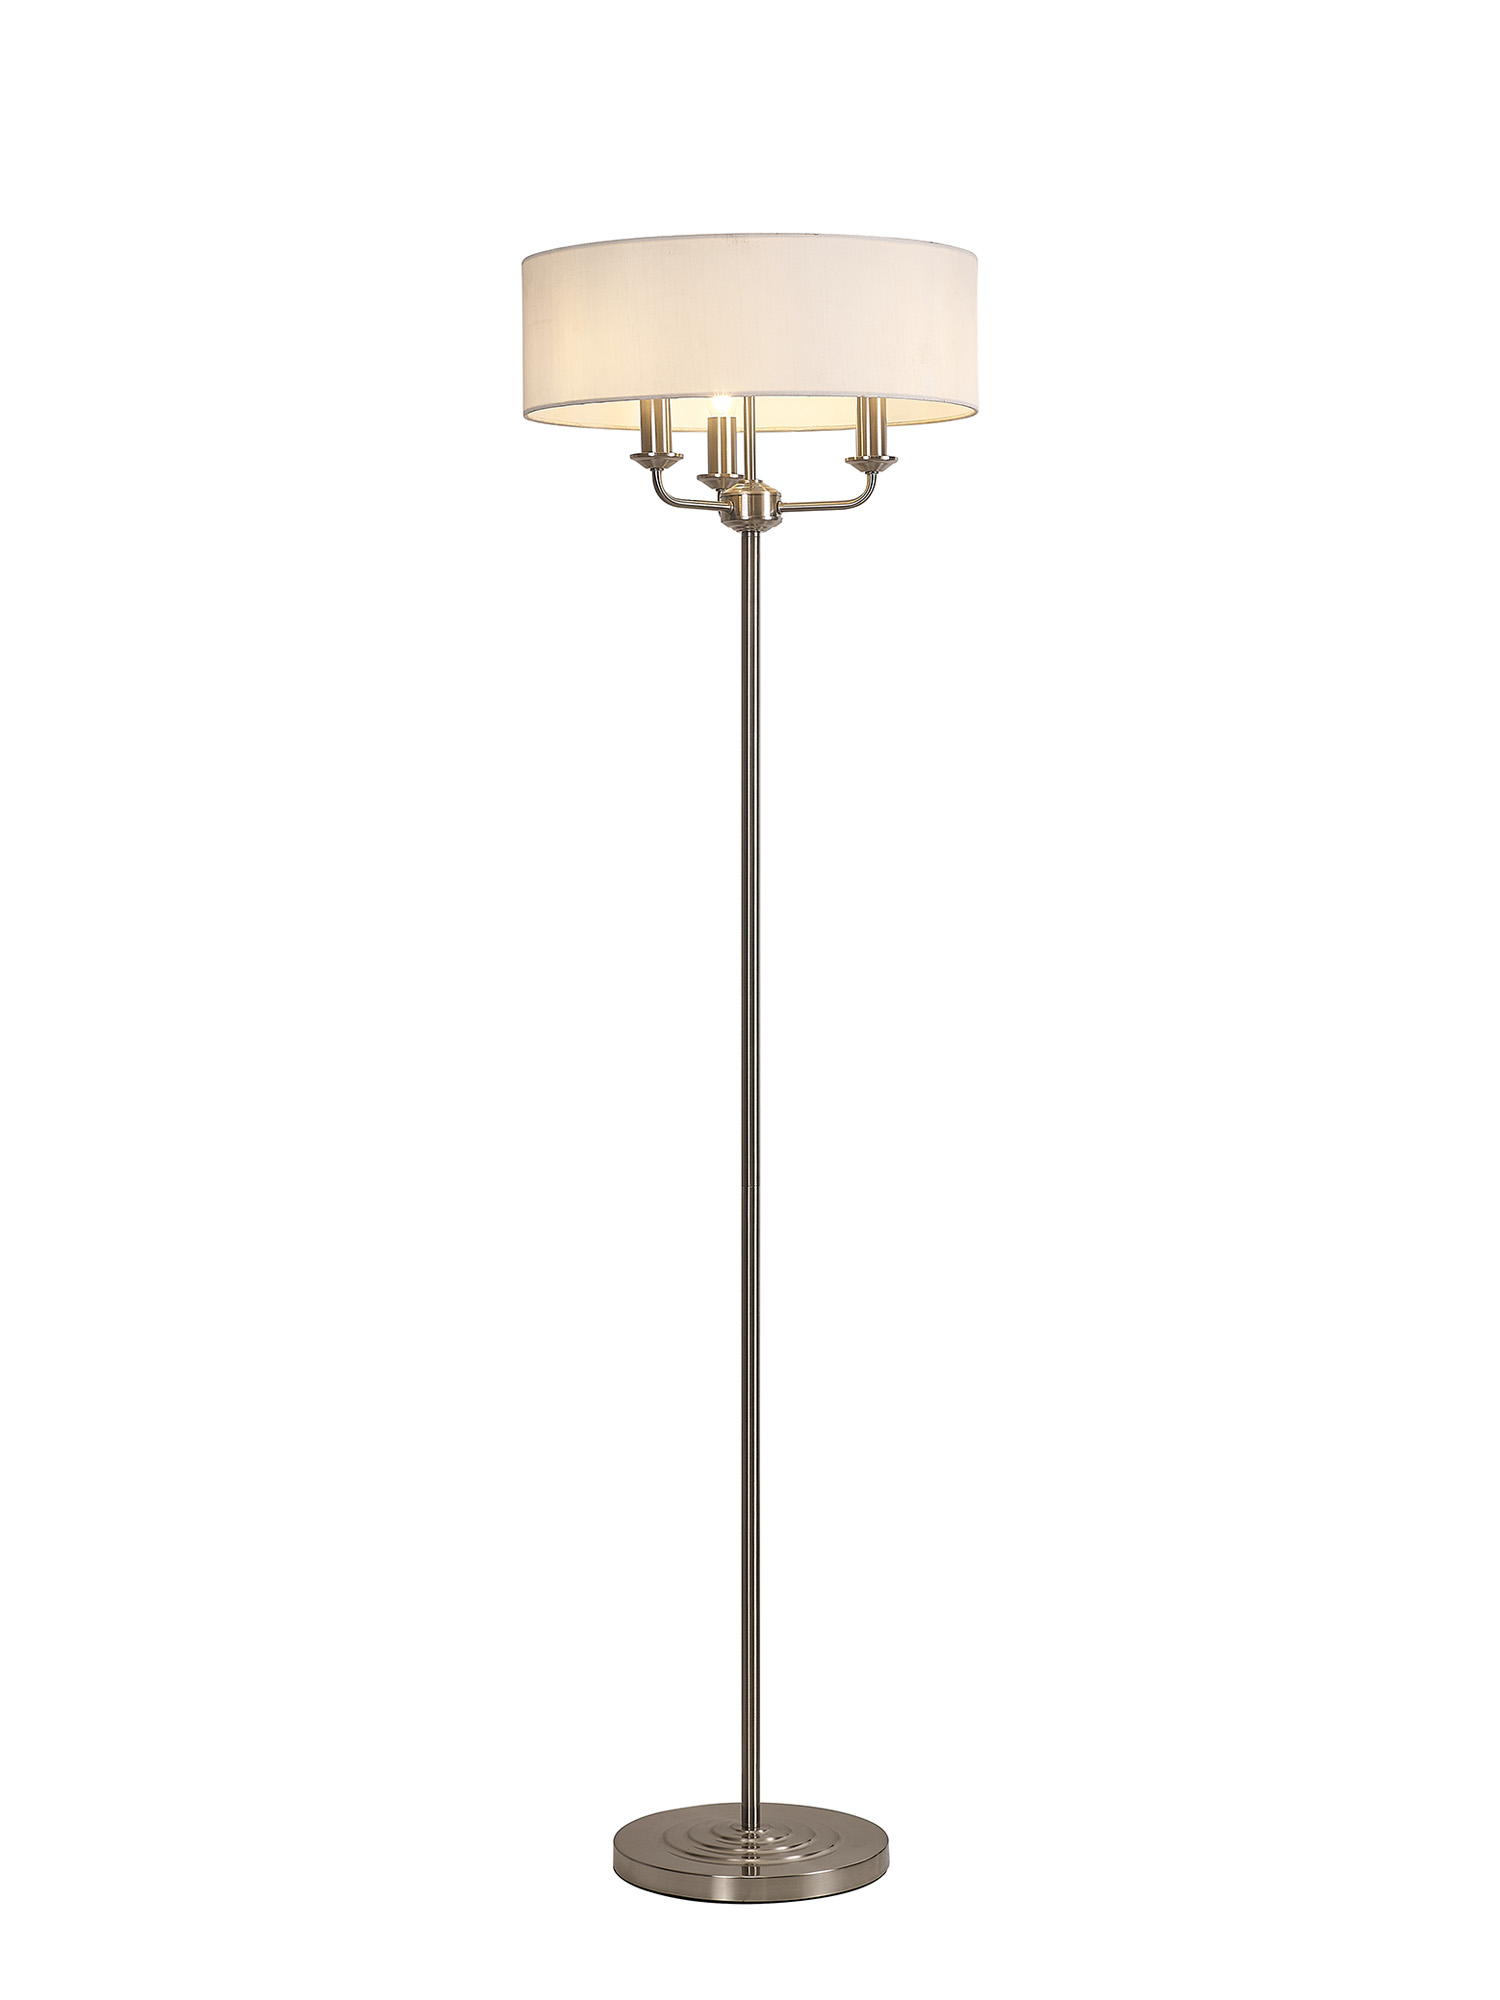 DK0921  Banyan 45cm 3 Light Floor Lamp Satin Nickel; White